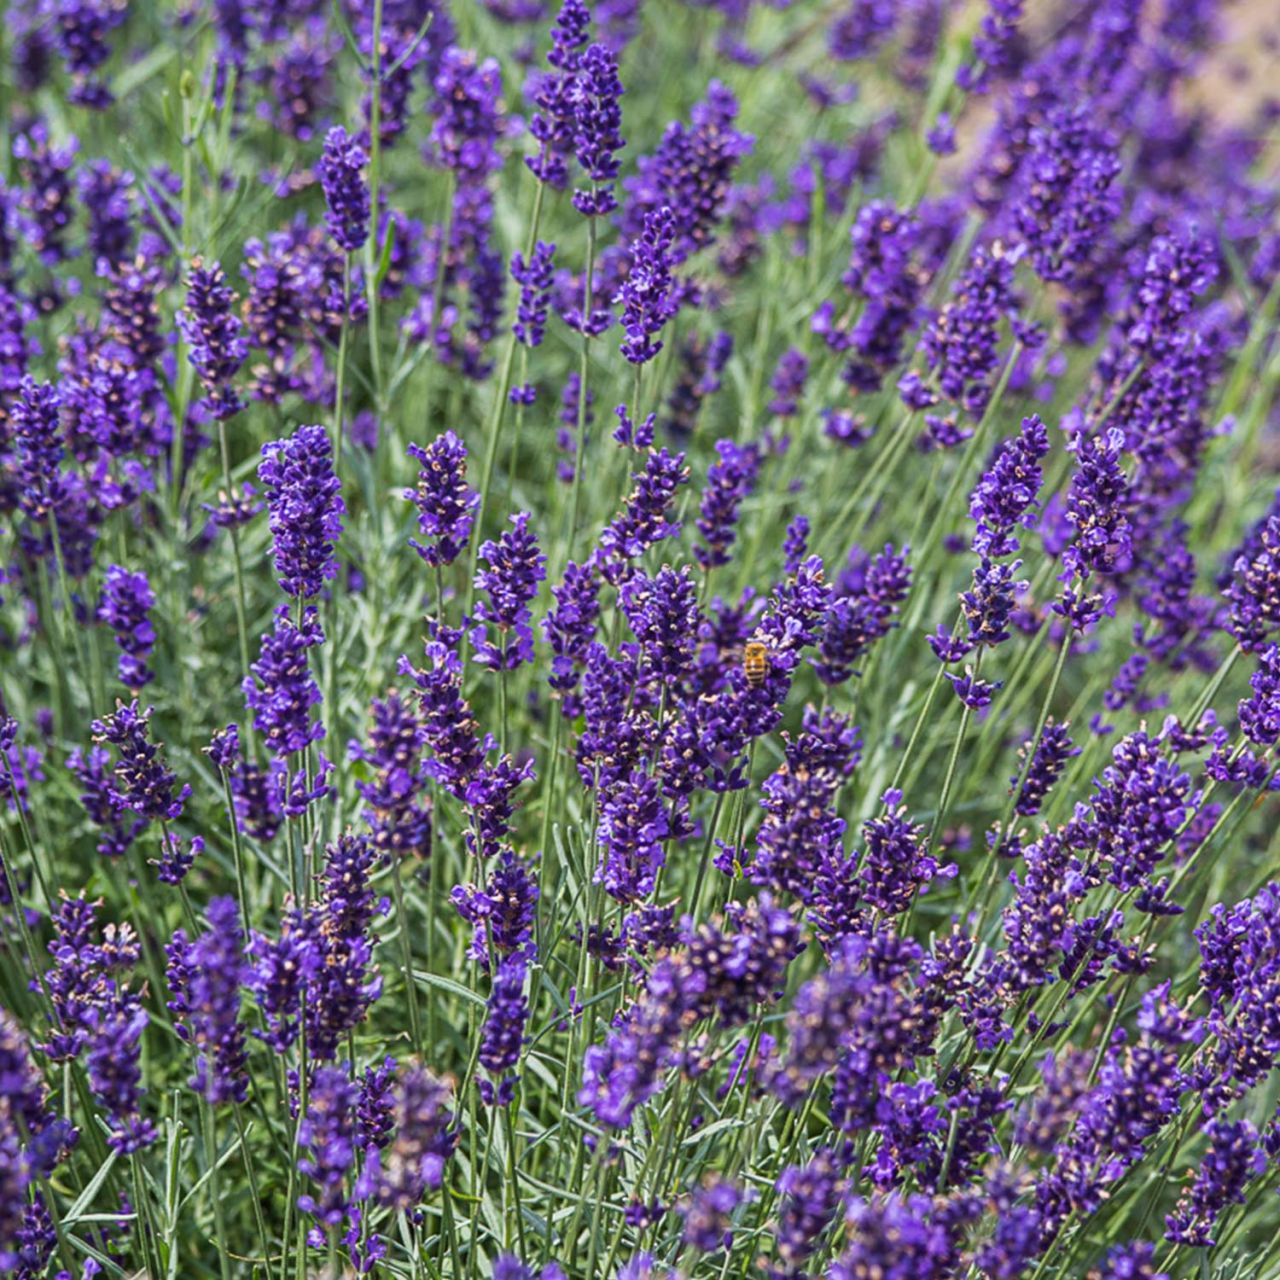  Lavendel 'Imperial Gem' - Lavandula angustifolia 'Imperial Gem'